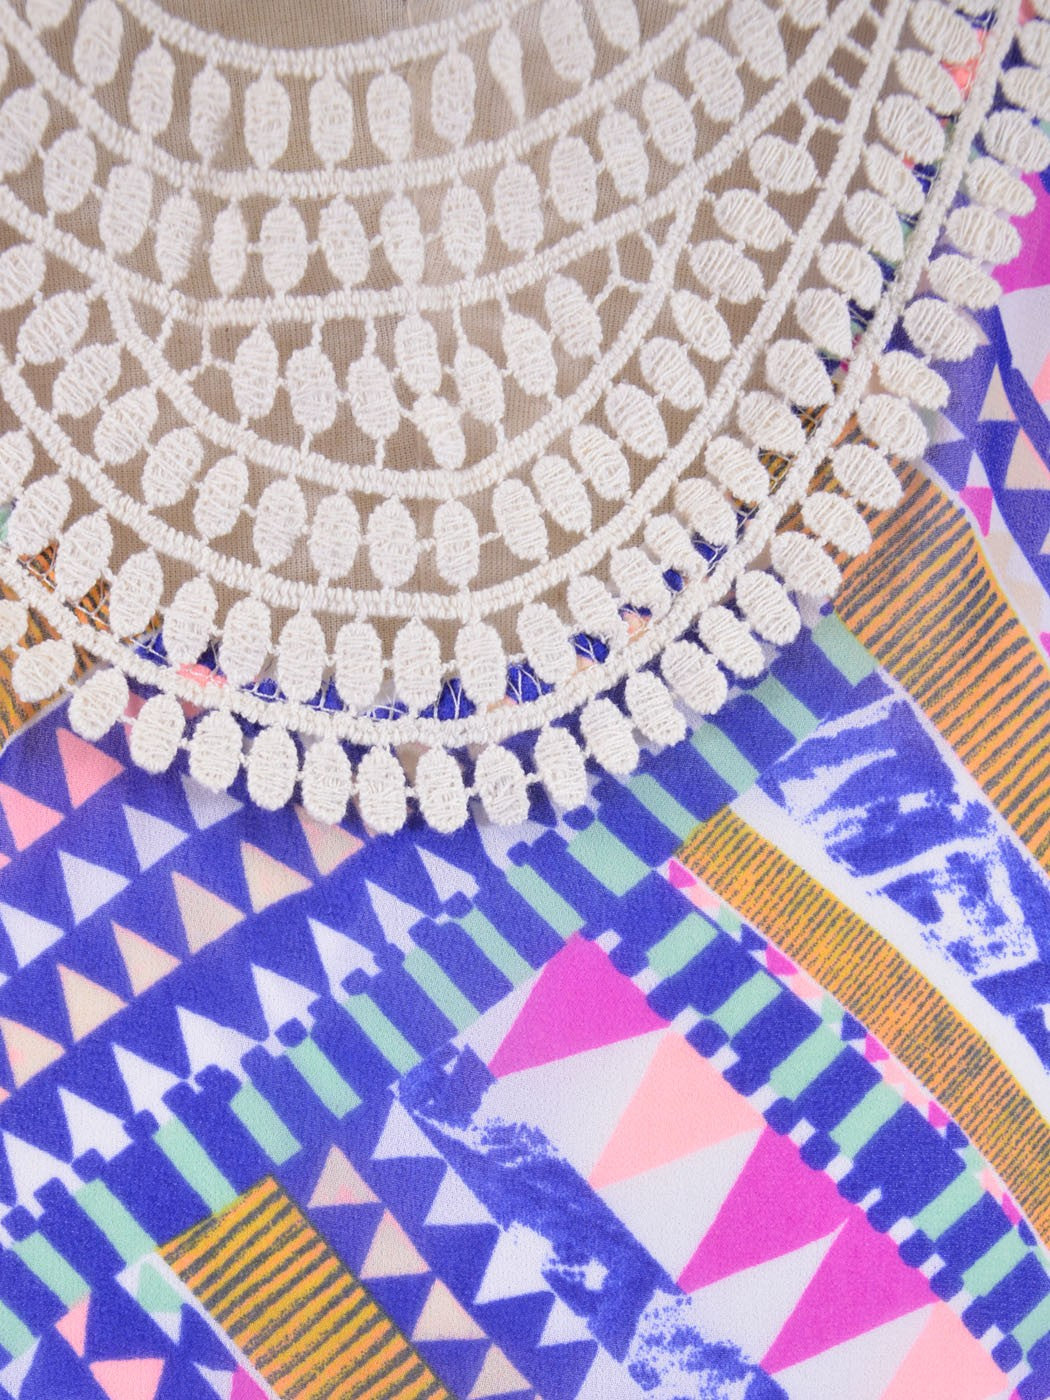 Lush Bright Colorful Whimsical Crochet U-Back Abstract Print Chiffon Maxi Dress